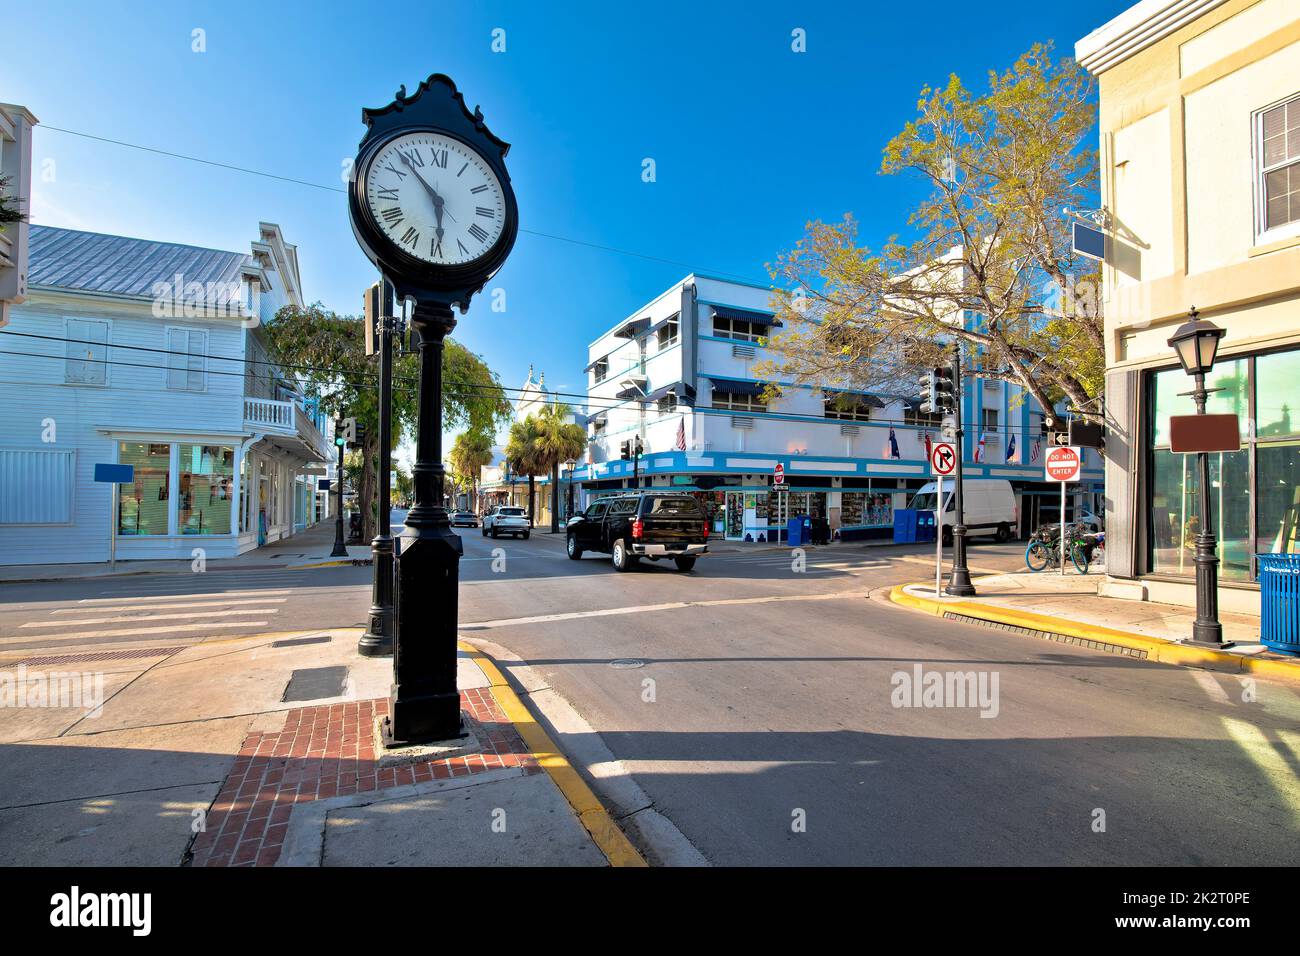 Key West famous Duval street view, south Florida Keys Stock Photo